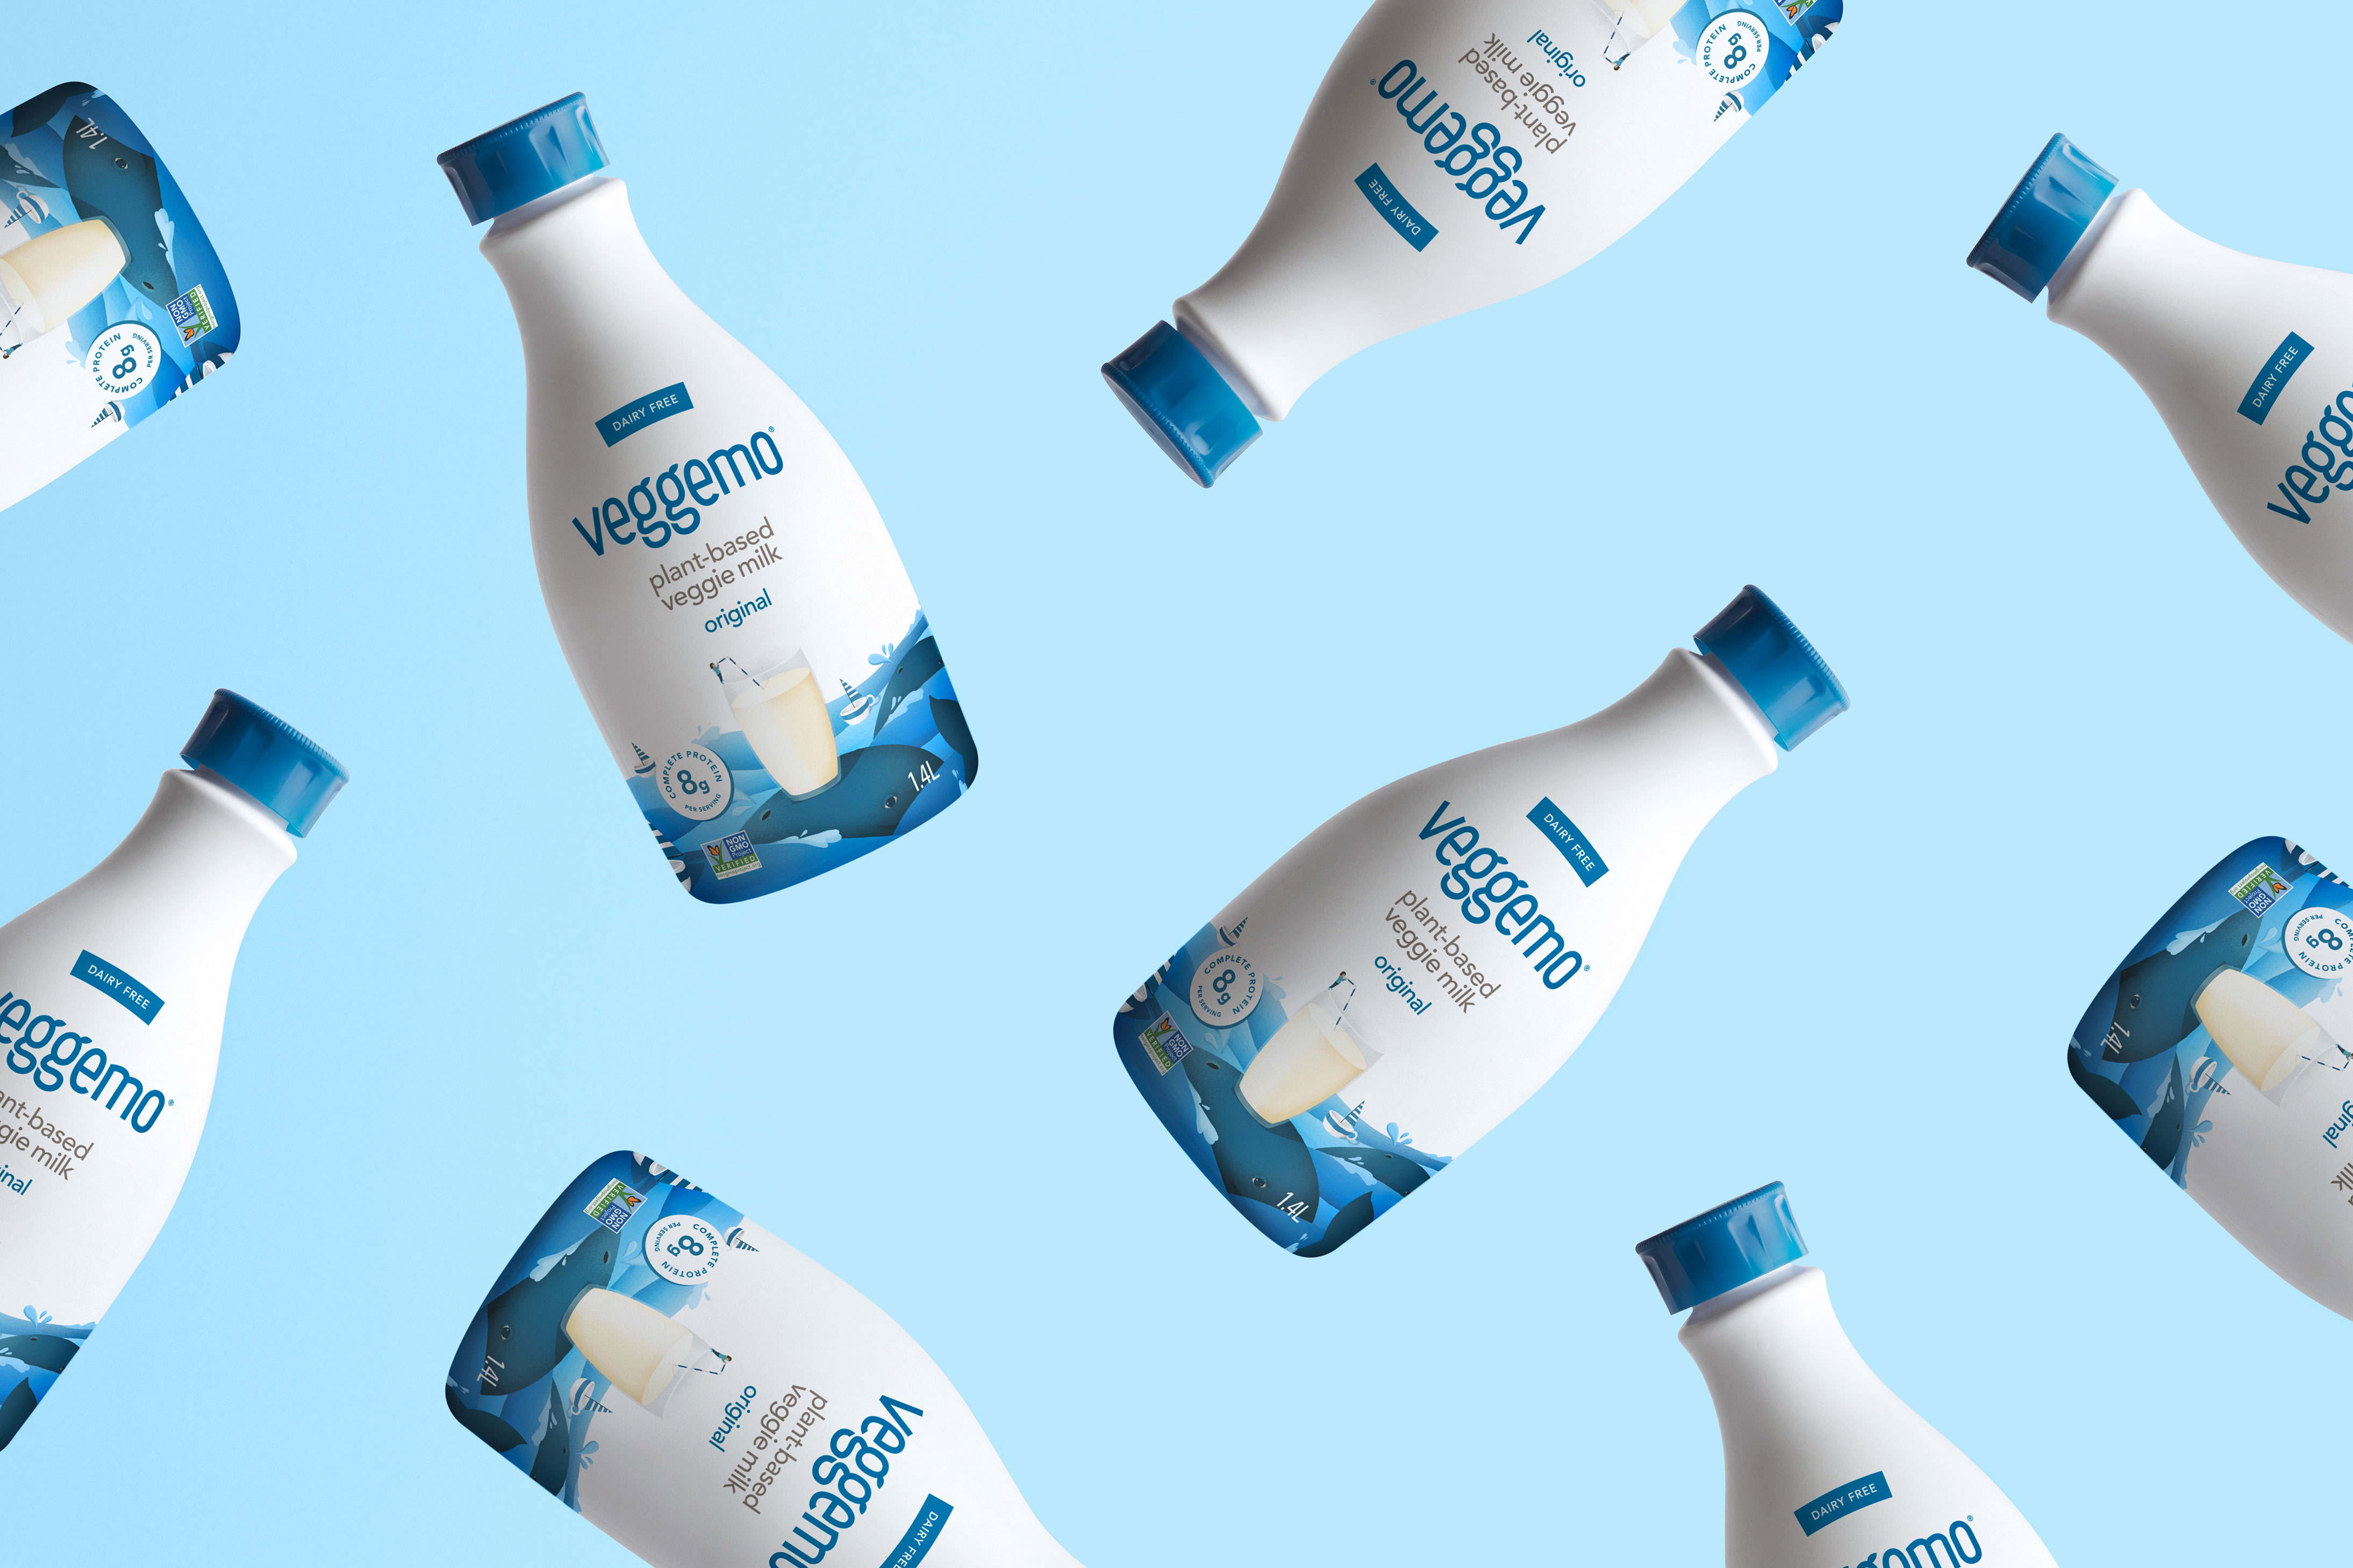 Non-Dairy Milk Veggemo Branding and Packaging Design by Pendo